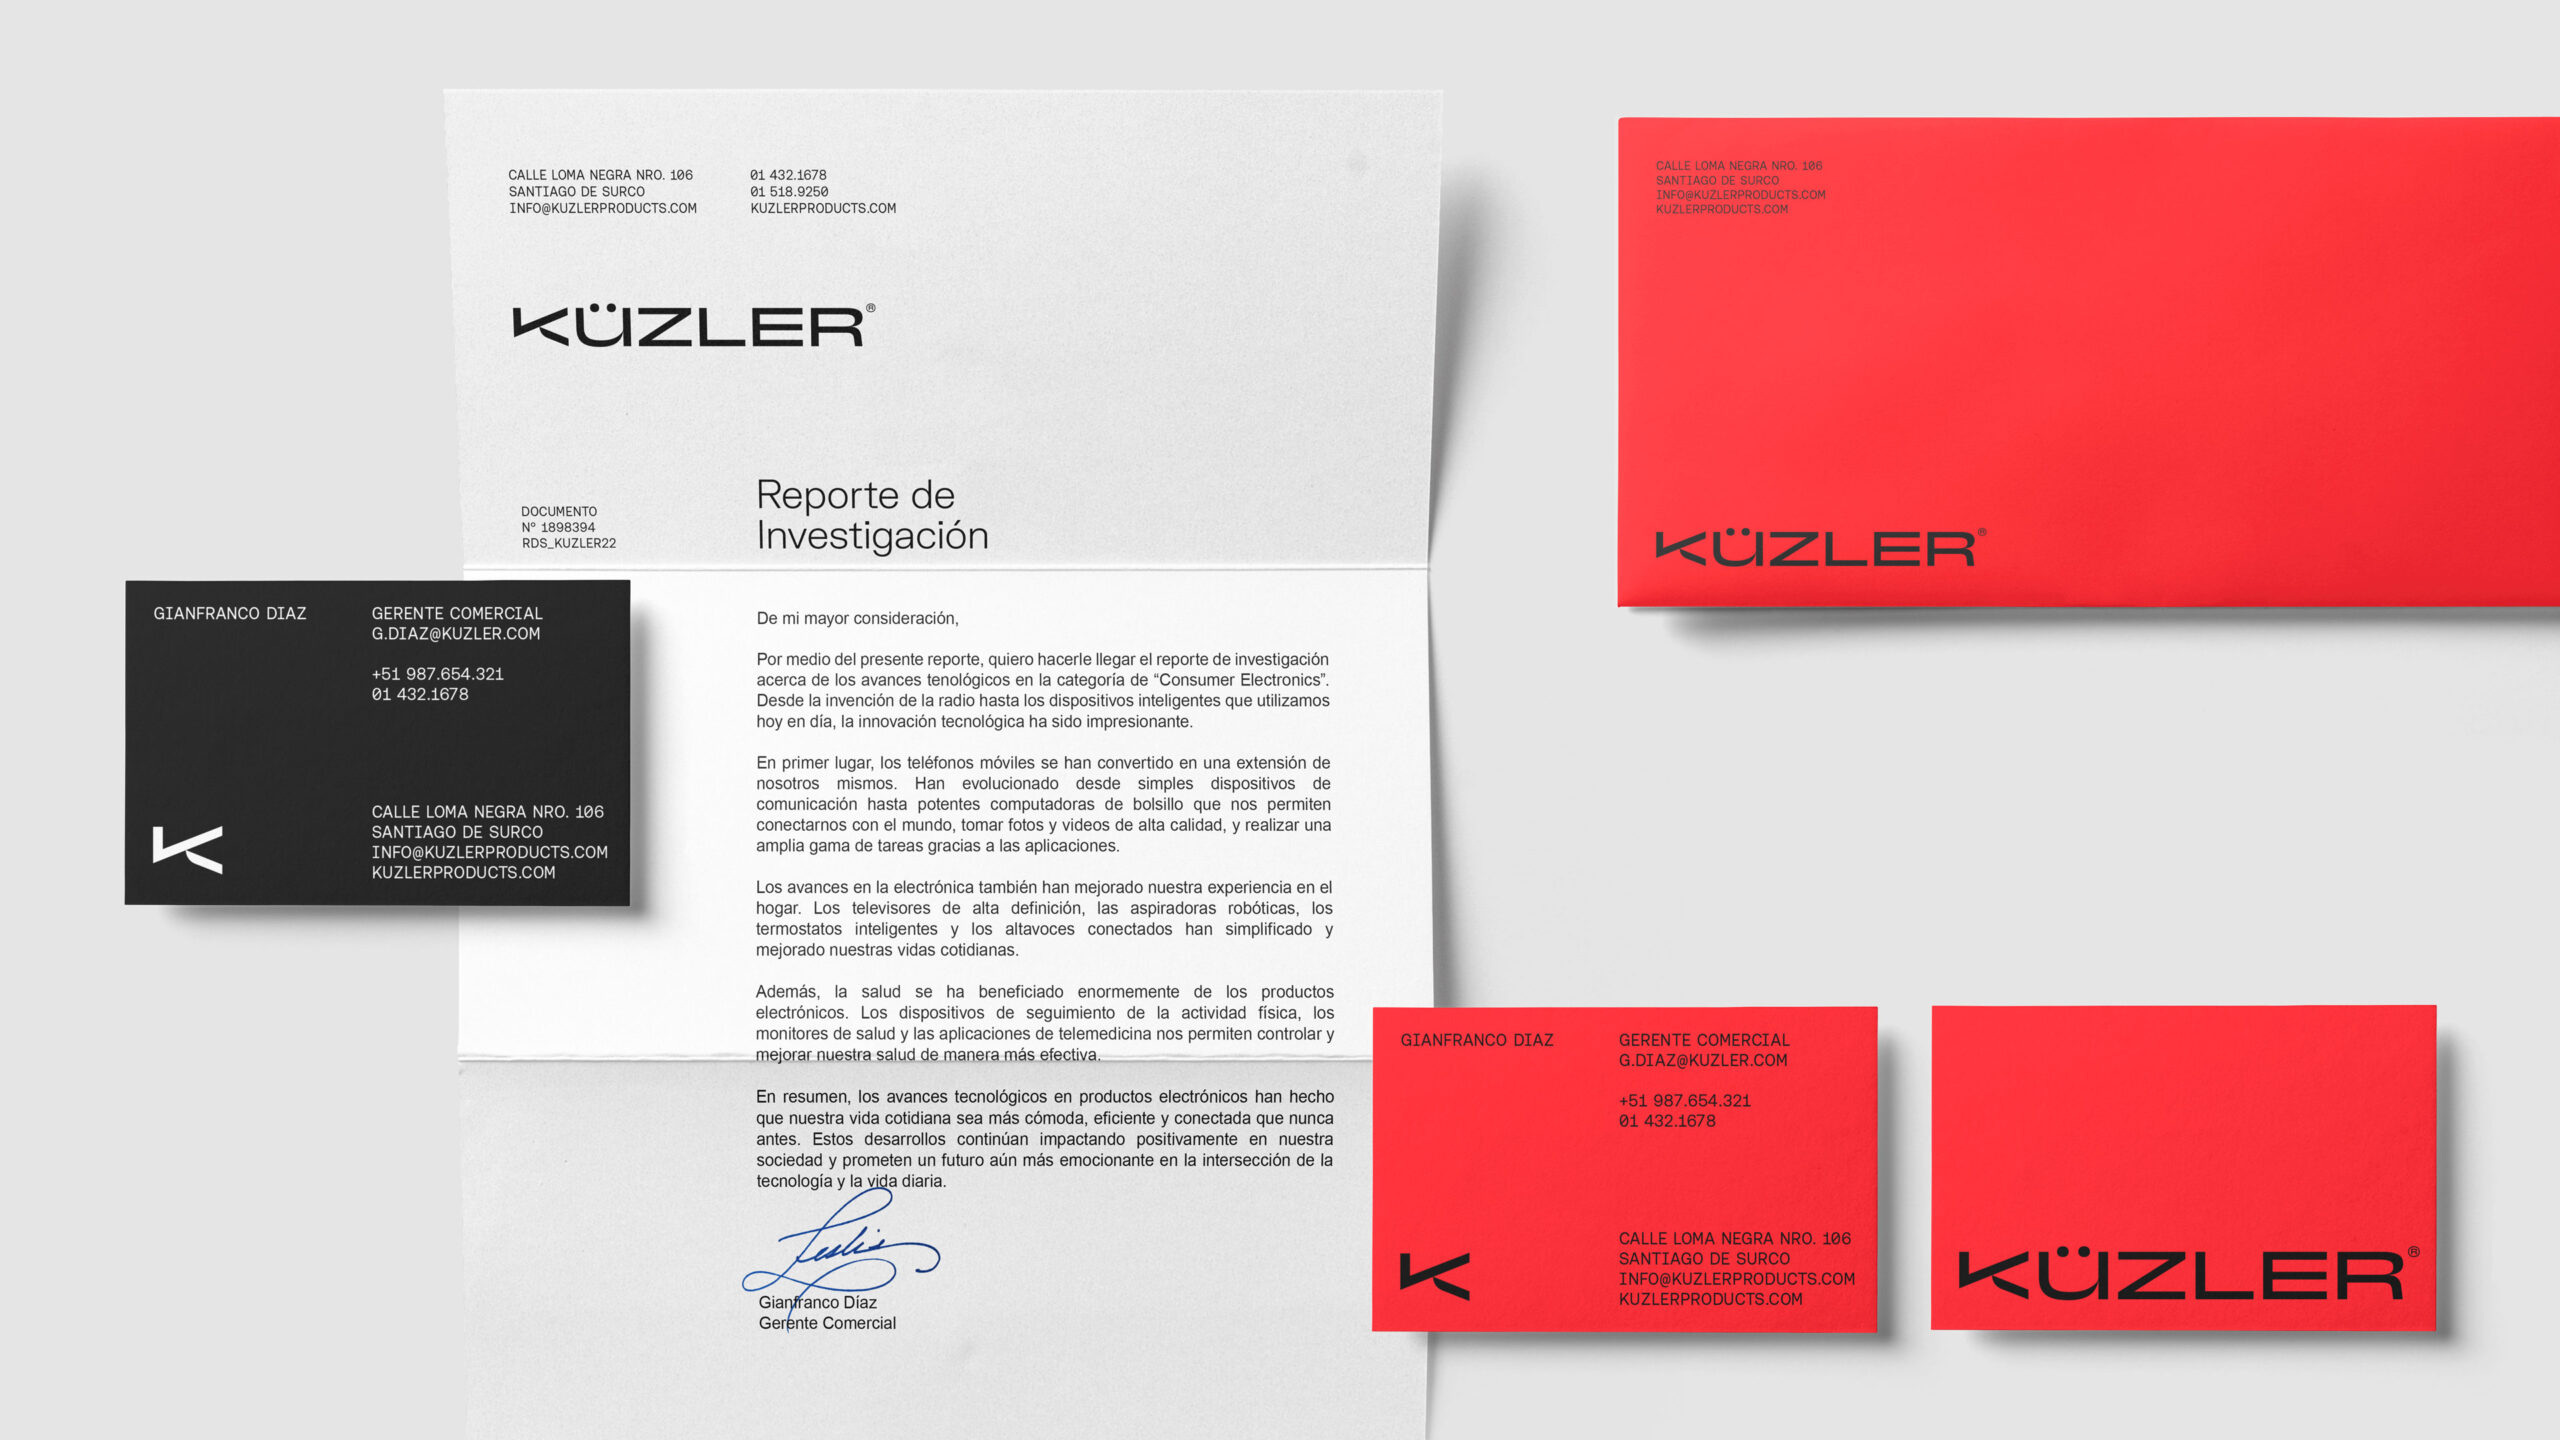 KÜZLER數位產品視覺形象設計